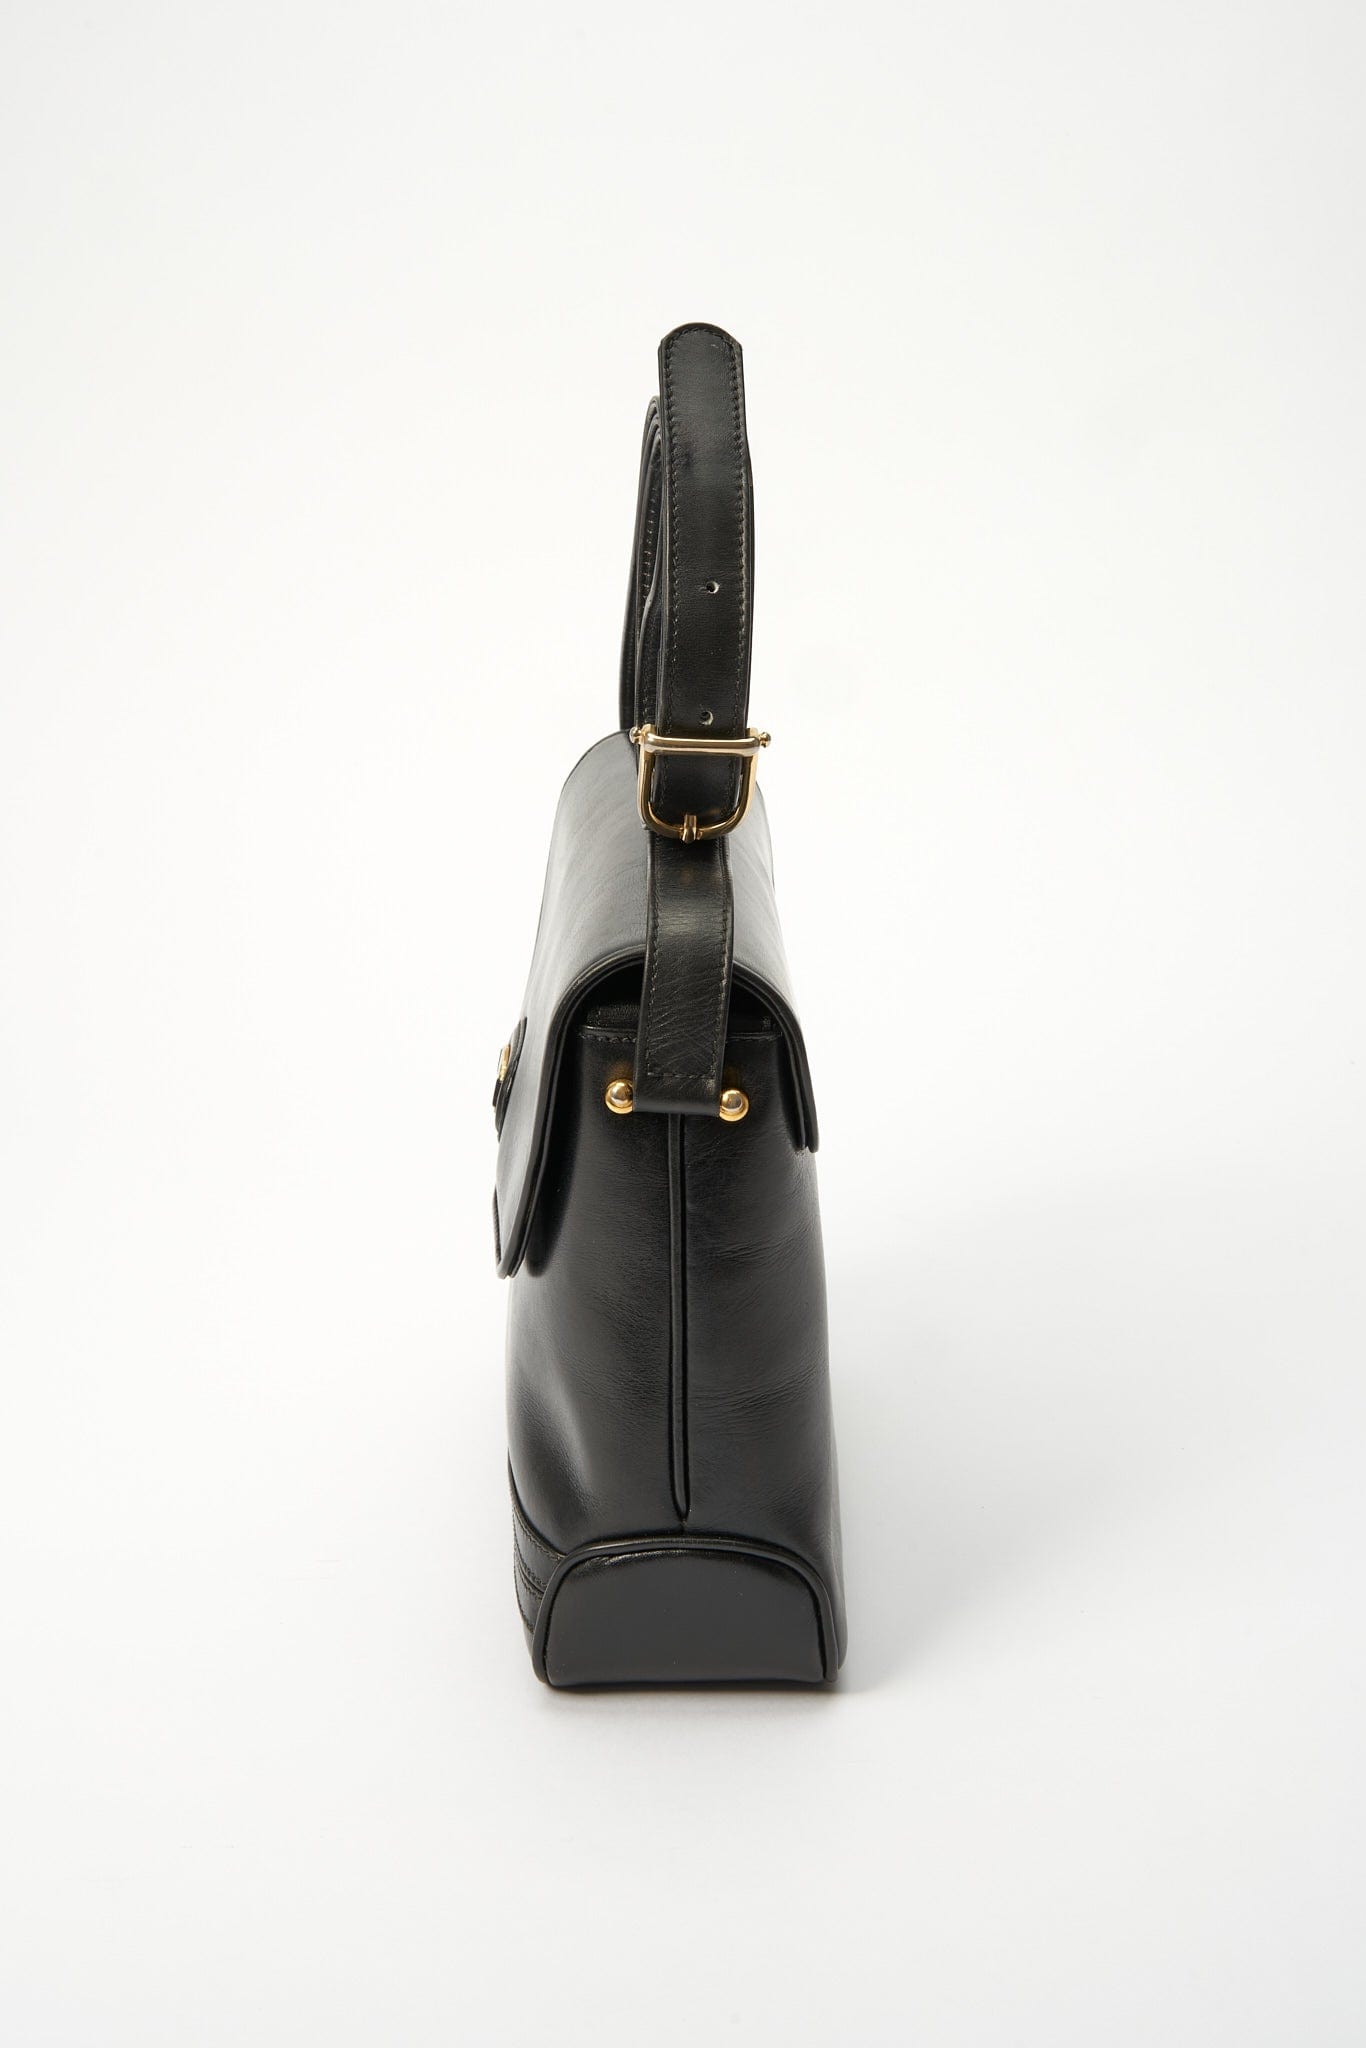 Vintage Celine Crossbody Black Bag